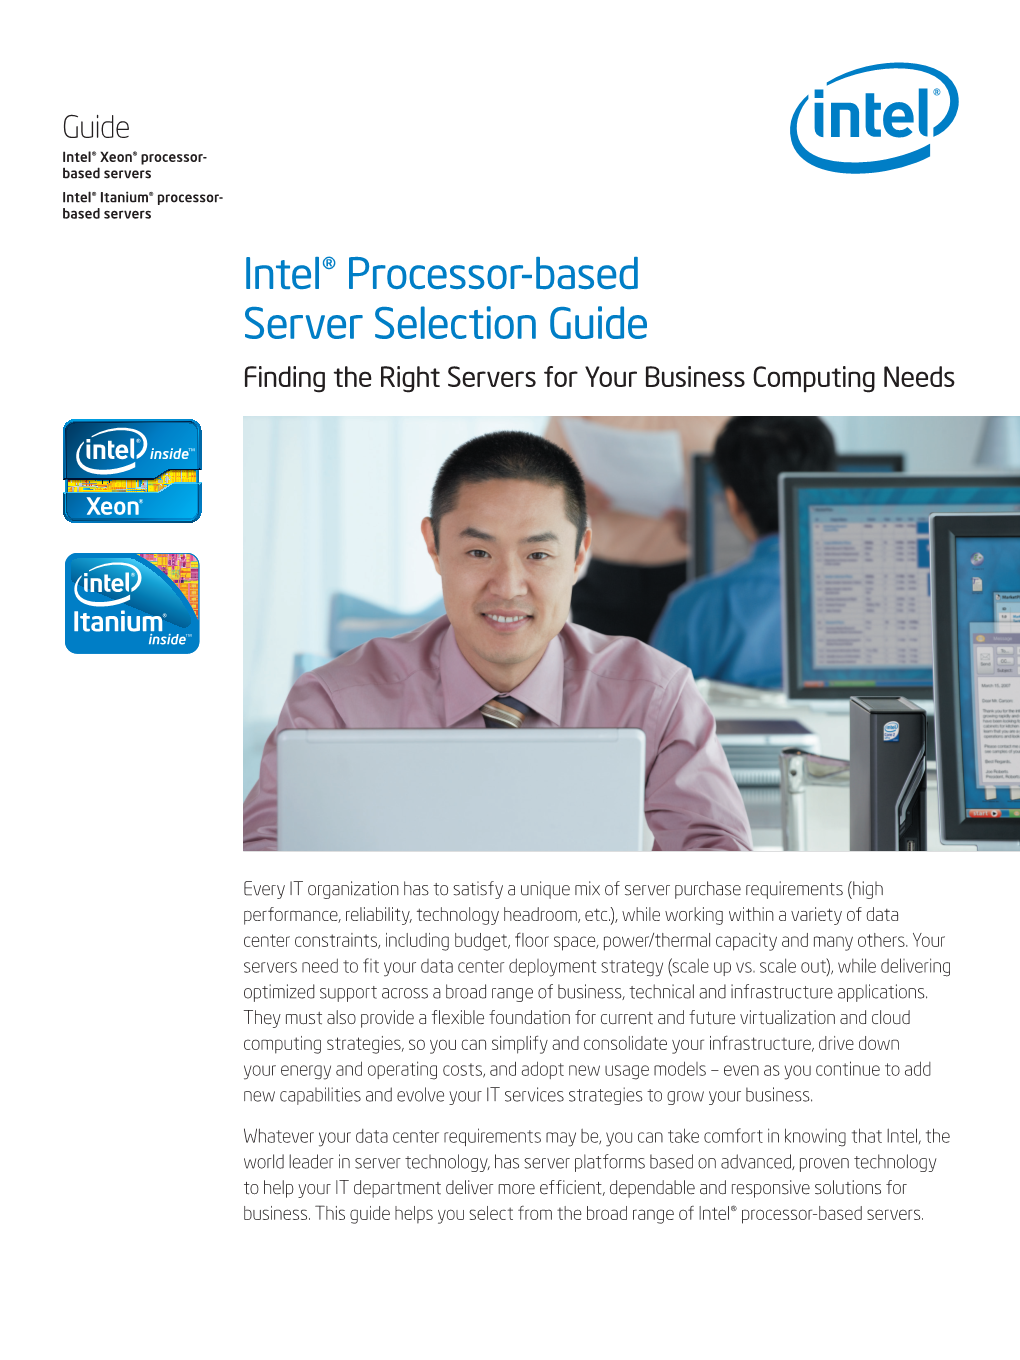 Intel Processor-Based Server Selection Guide